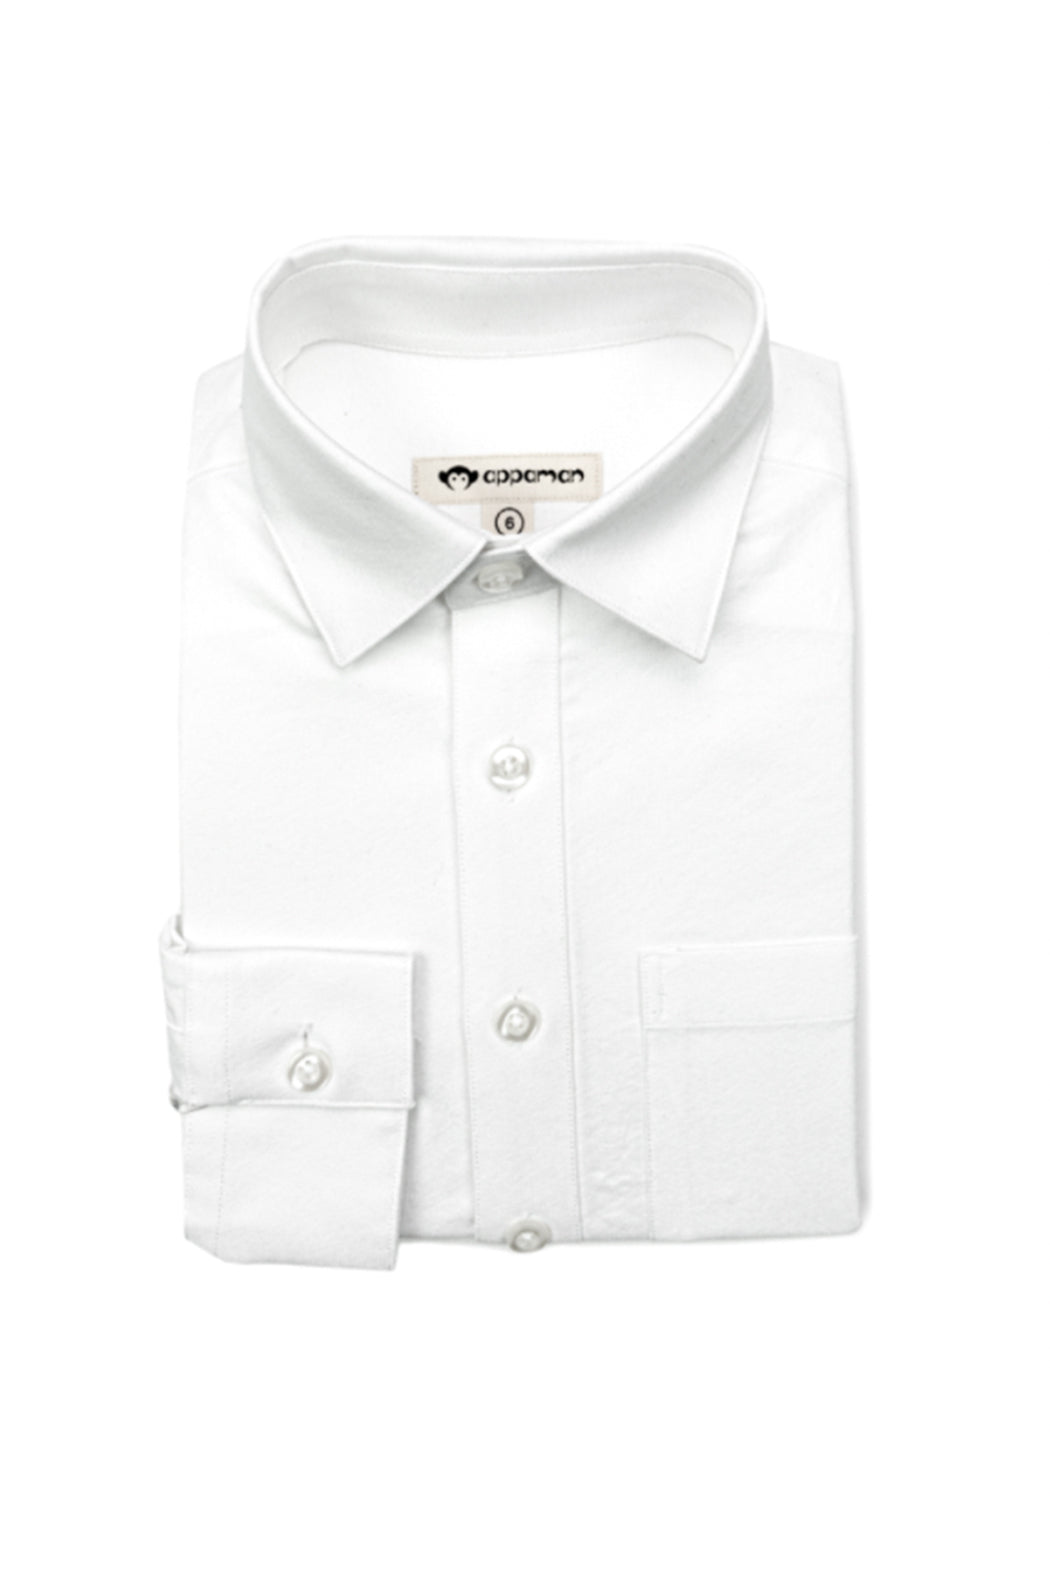 Appaman Standard Shirt - Oxford White